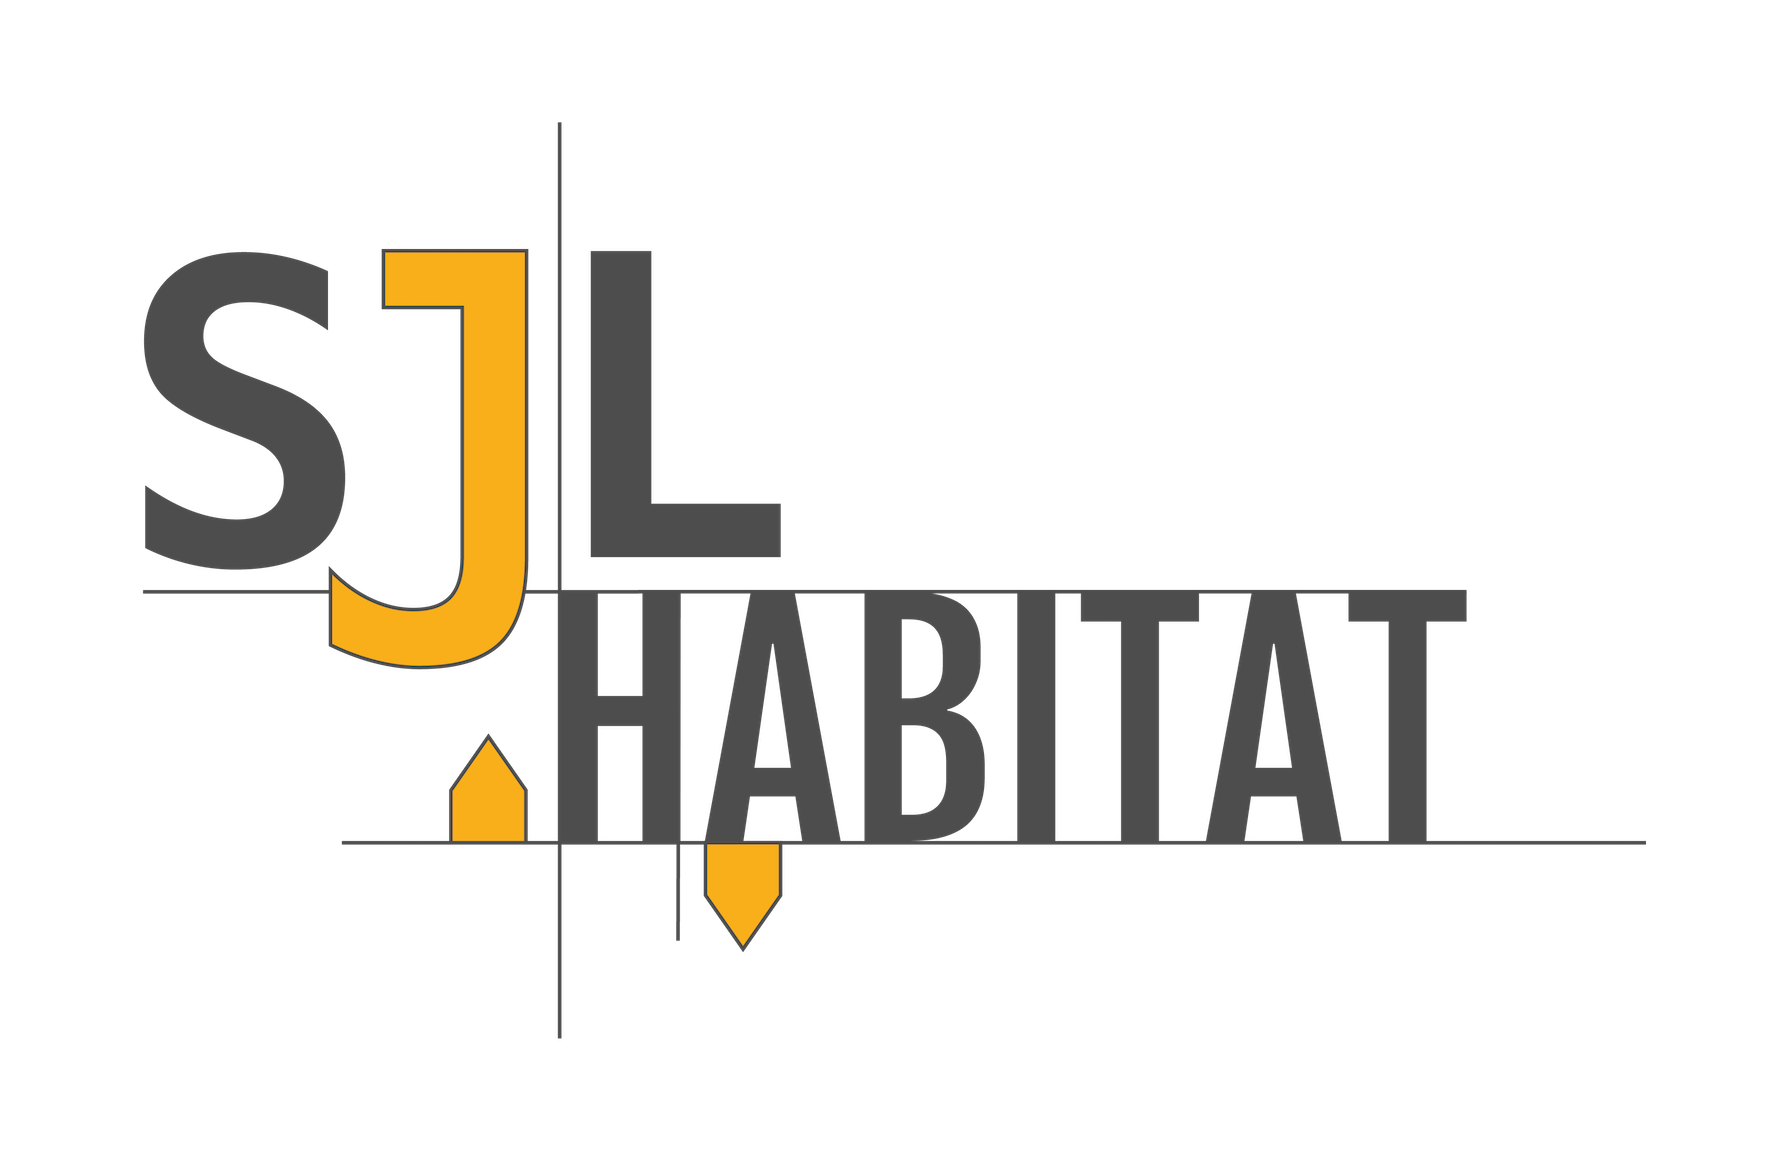 SJL habitat